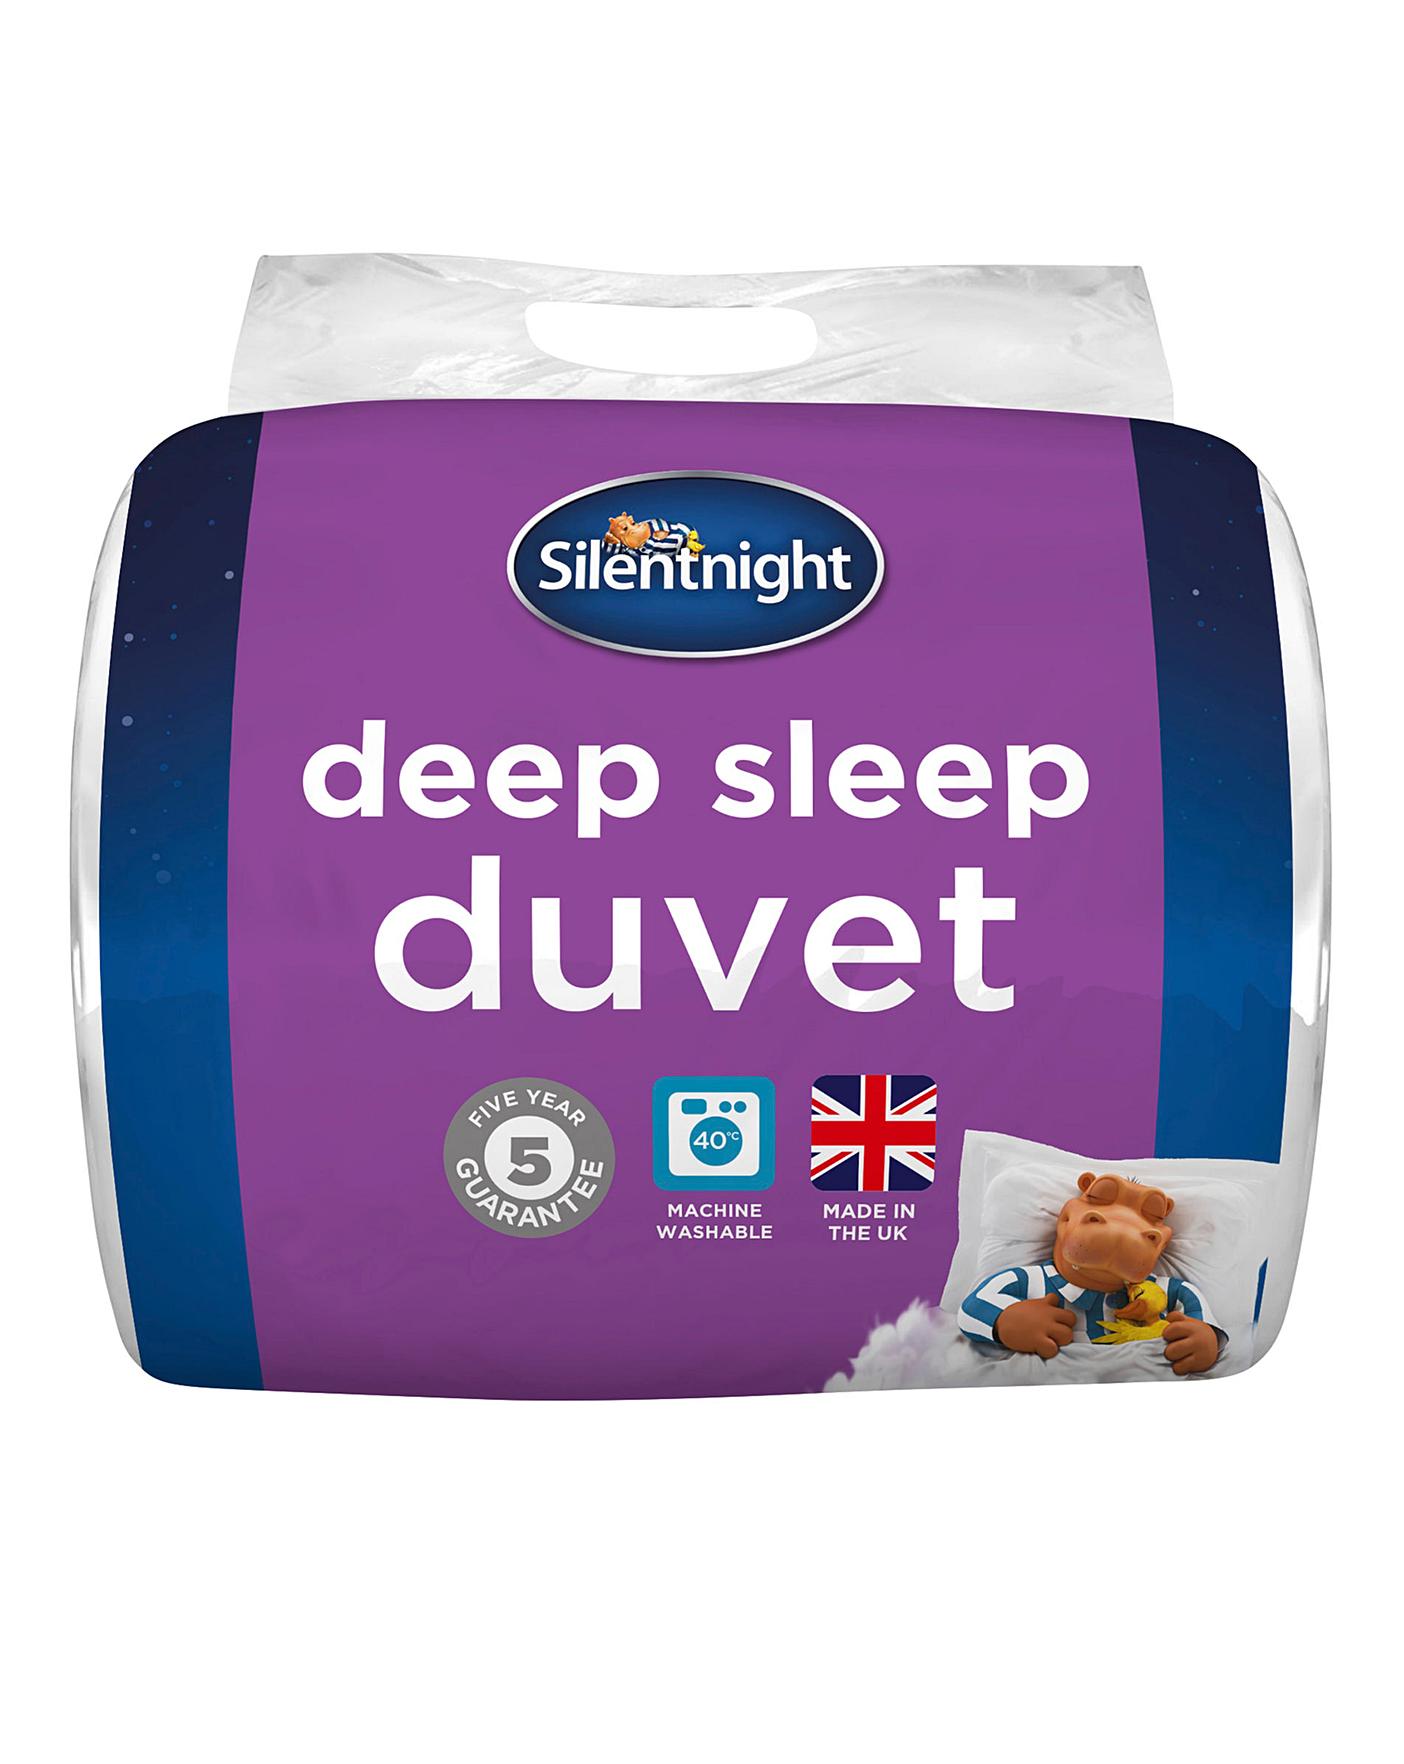 Silentnight Deepsleep Duvet 7 5 Tog Oxendales